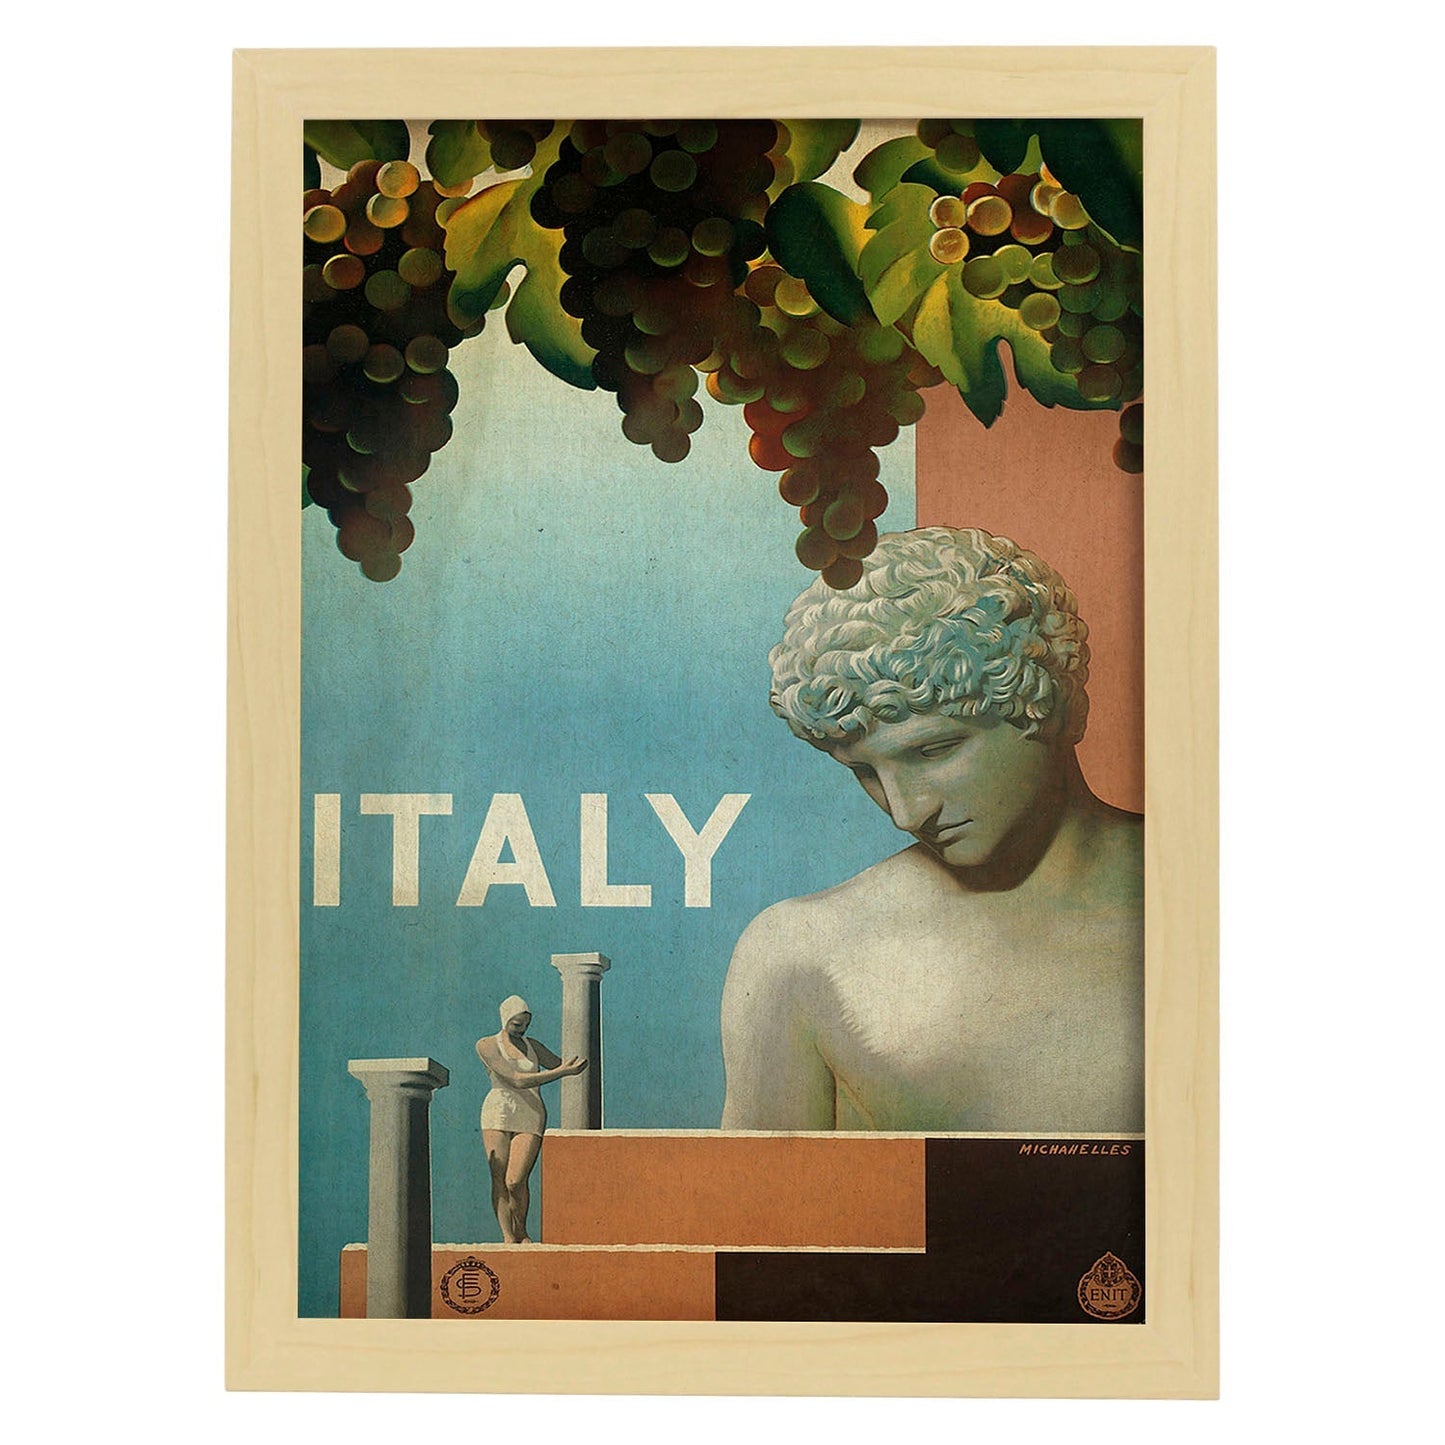 Poster vintage. Cartel vintage de Francia e Italia. Viaja a Italia.-Artwork-Nacnic-A4-Marco Madera clara-Nacnic Estudio SL